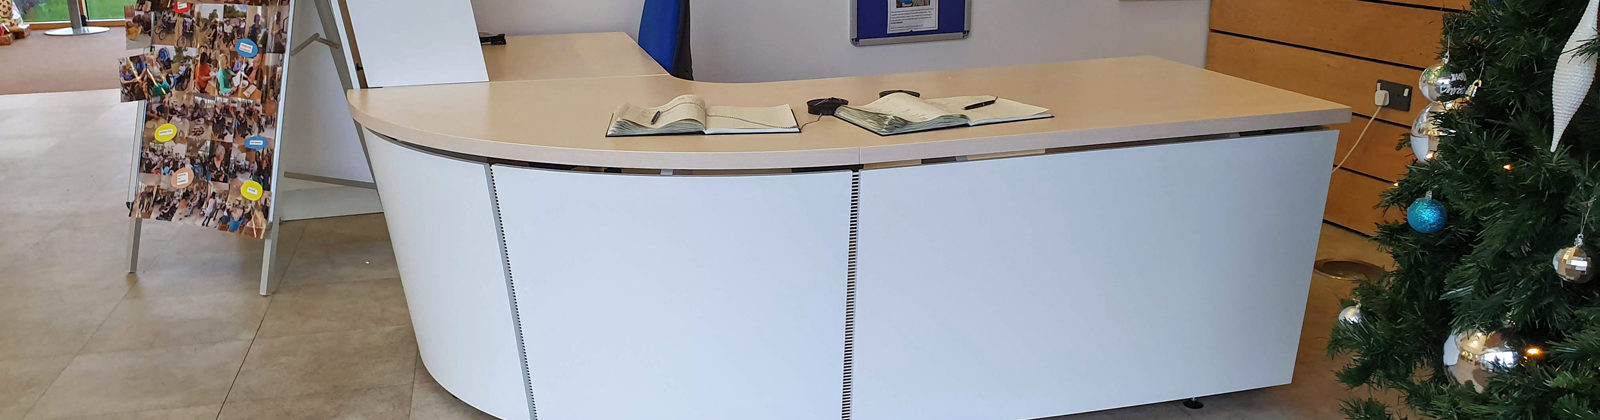 Norse reception desk installation